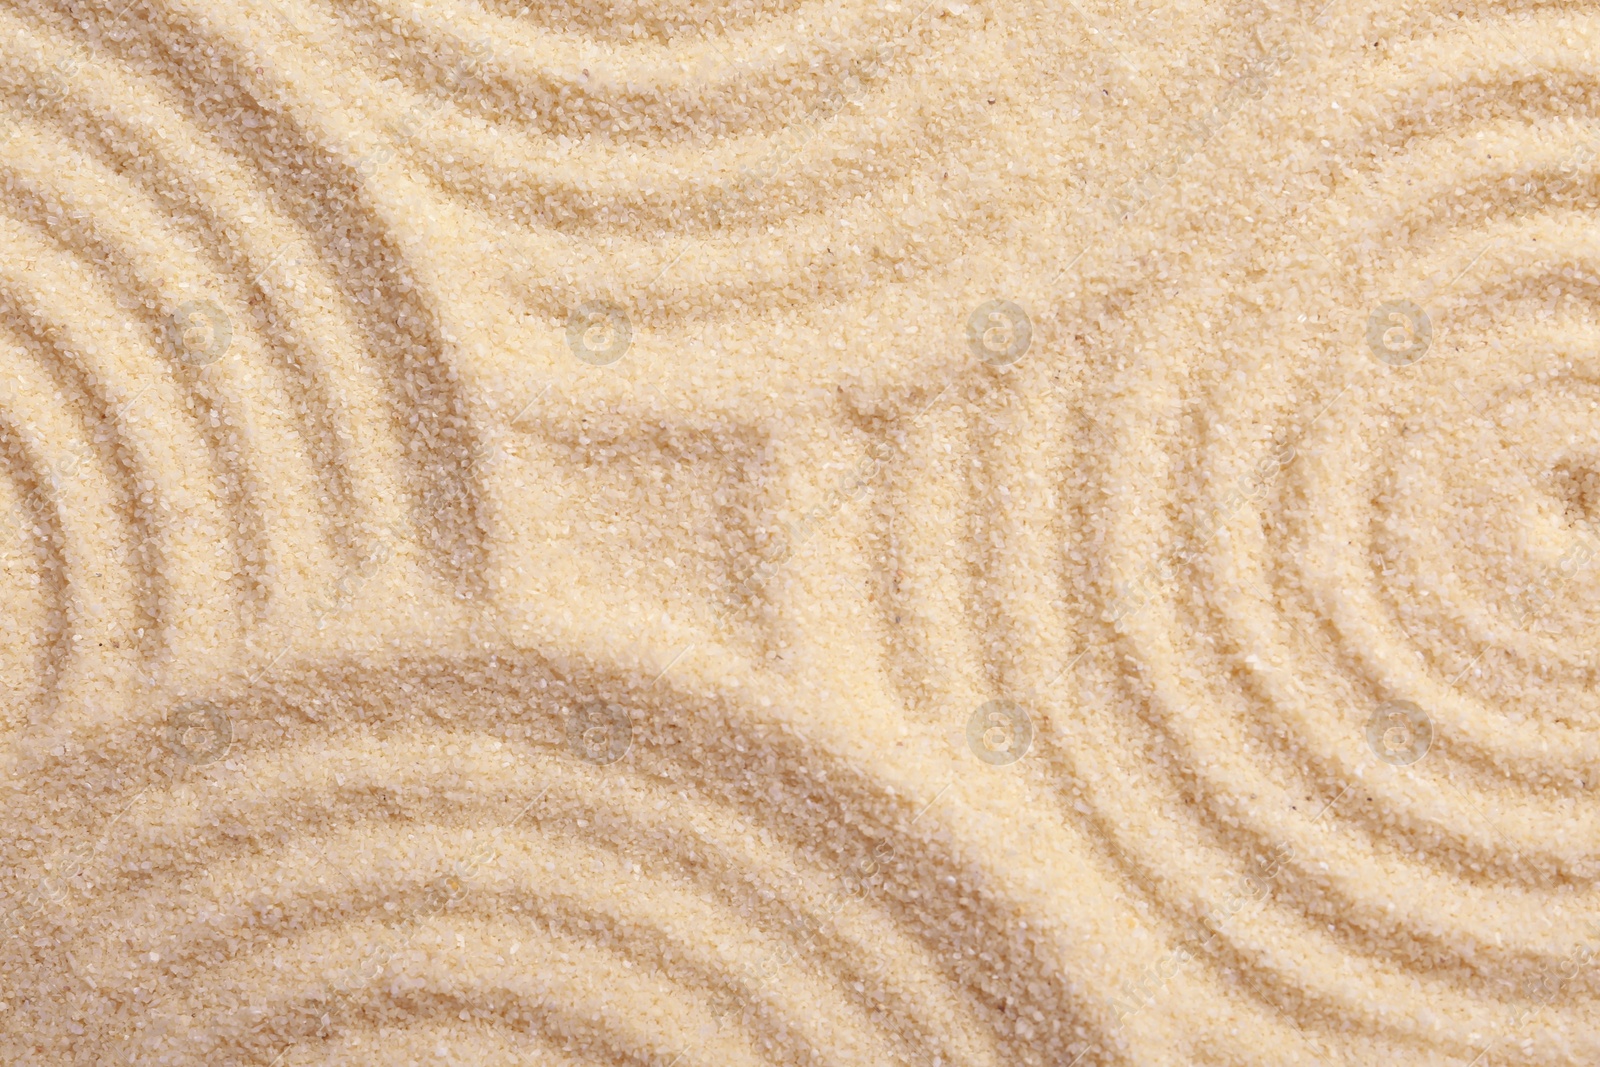 Photo of Zen rock garden. Circle patterns on beige sand, top view